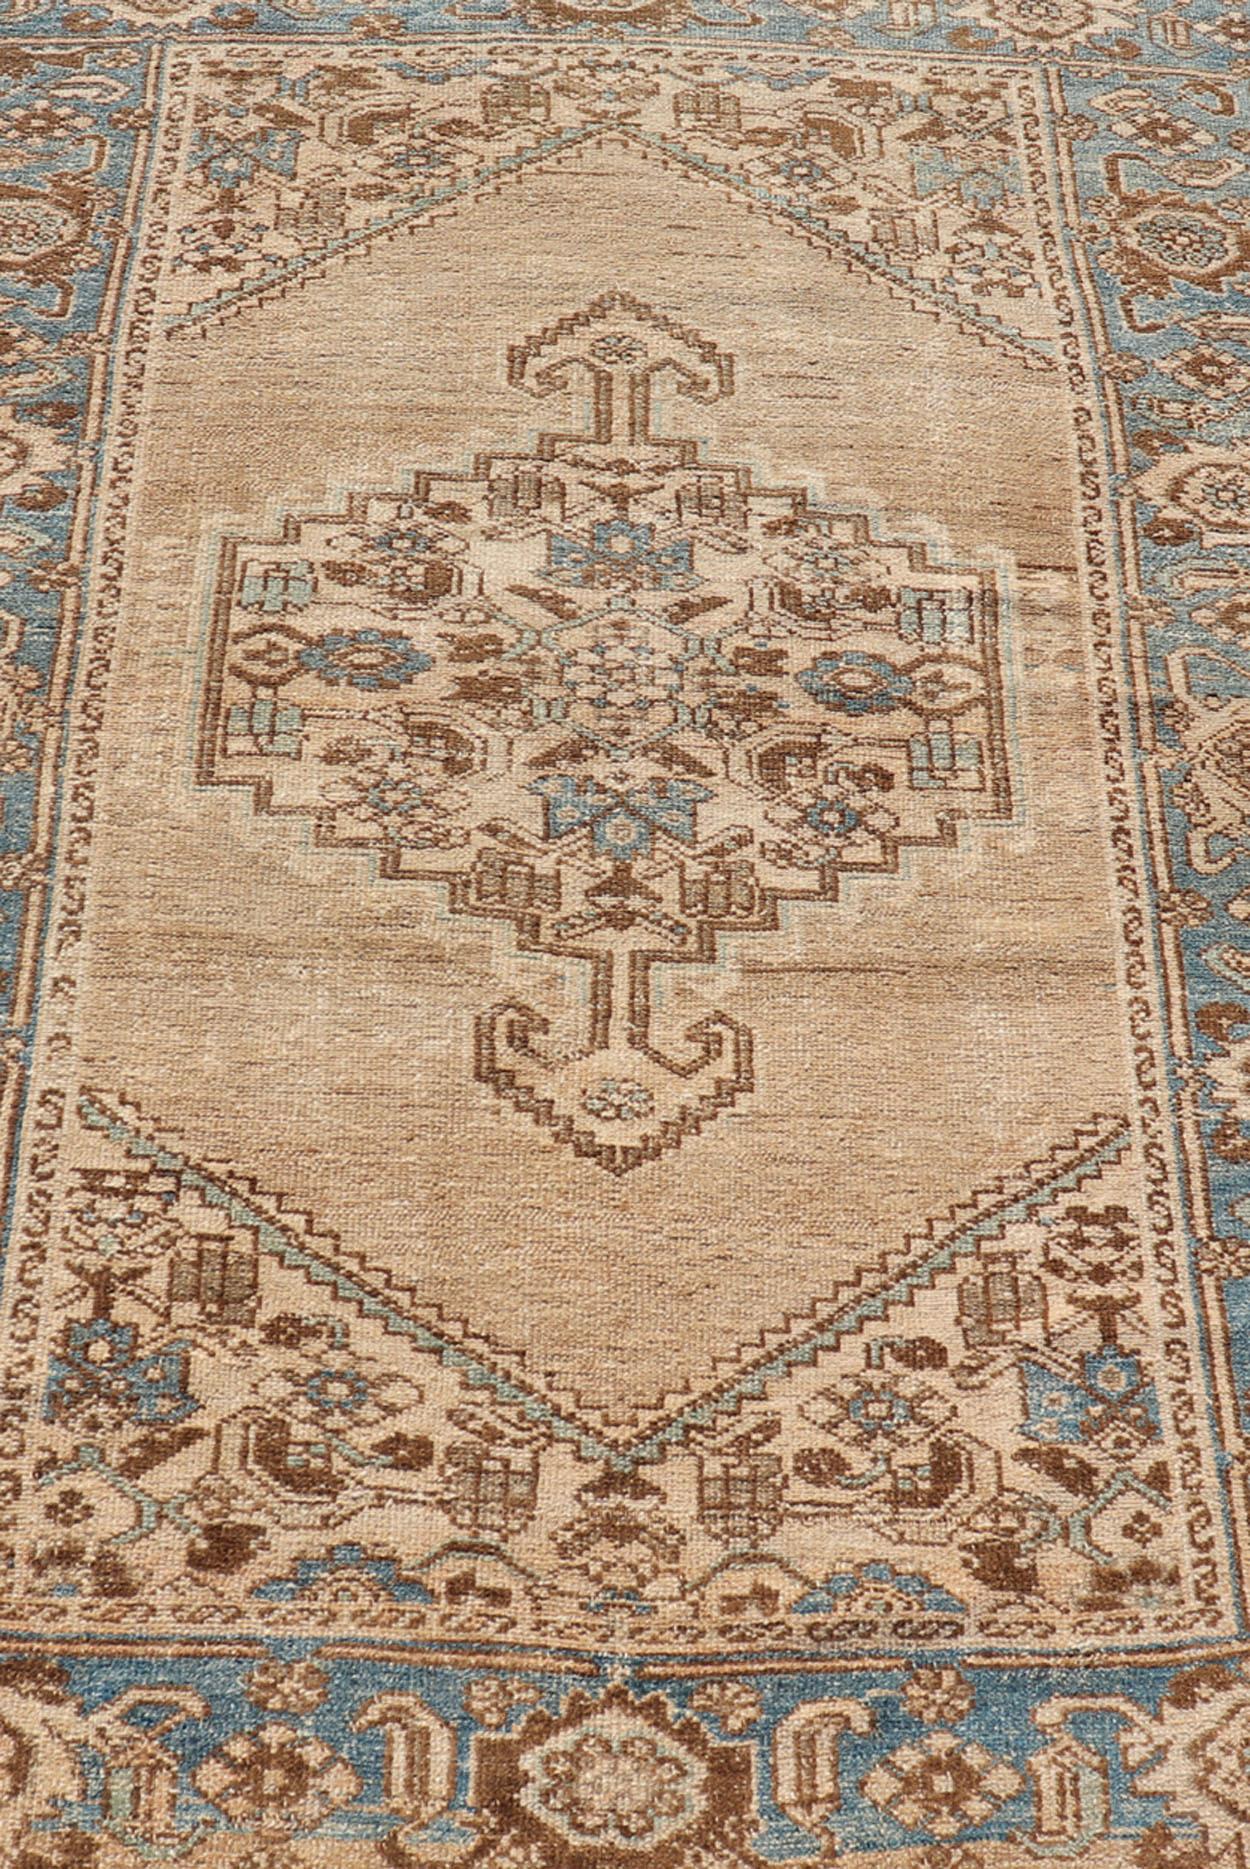 Petit tapis persan ancien de Hamadan avec Design/One en Tan, bleu clair et accents bruns. Keivan Woven Arts / tapis VAS-55111, origine / type : Iran / Hamedan, vers 1920

Mesures : 4'4 x 6'5 

Ce tapis Hamadan de Perse présente un médaillon central